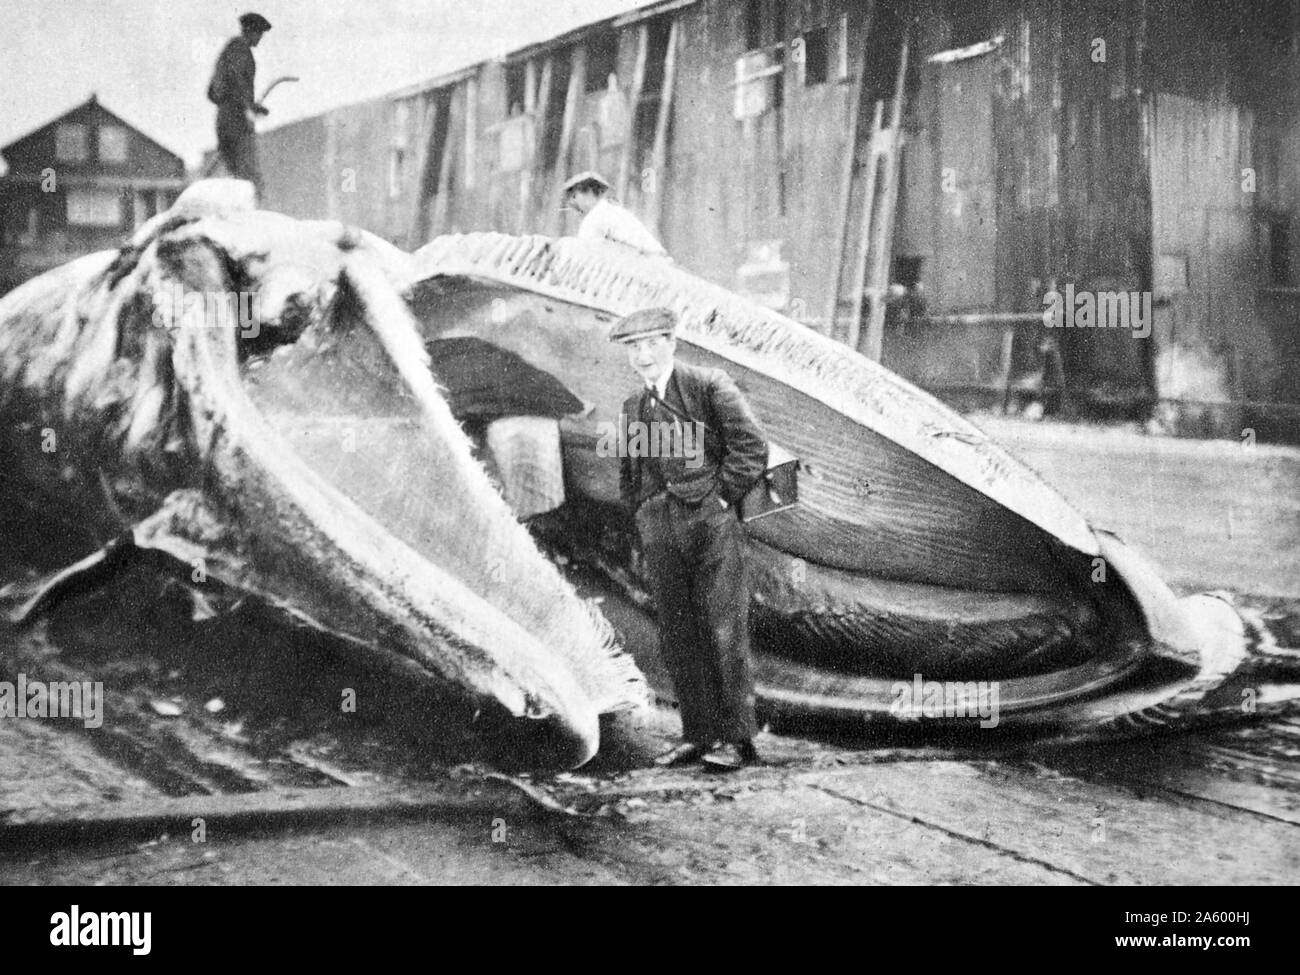 Curiosi di visitare la carcassa di una balena macellati; Inghilterra 1900 Foto Stock